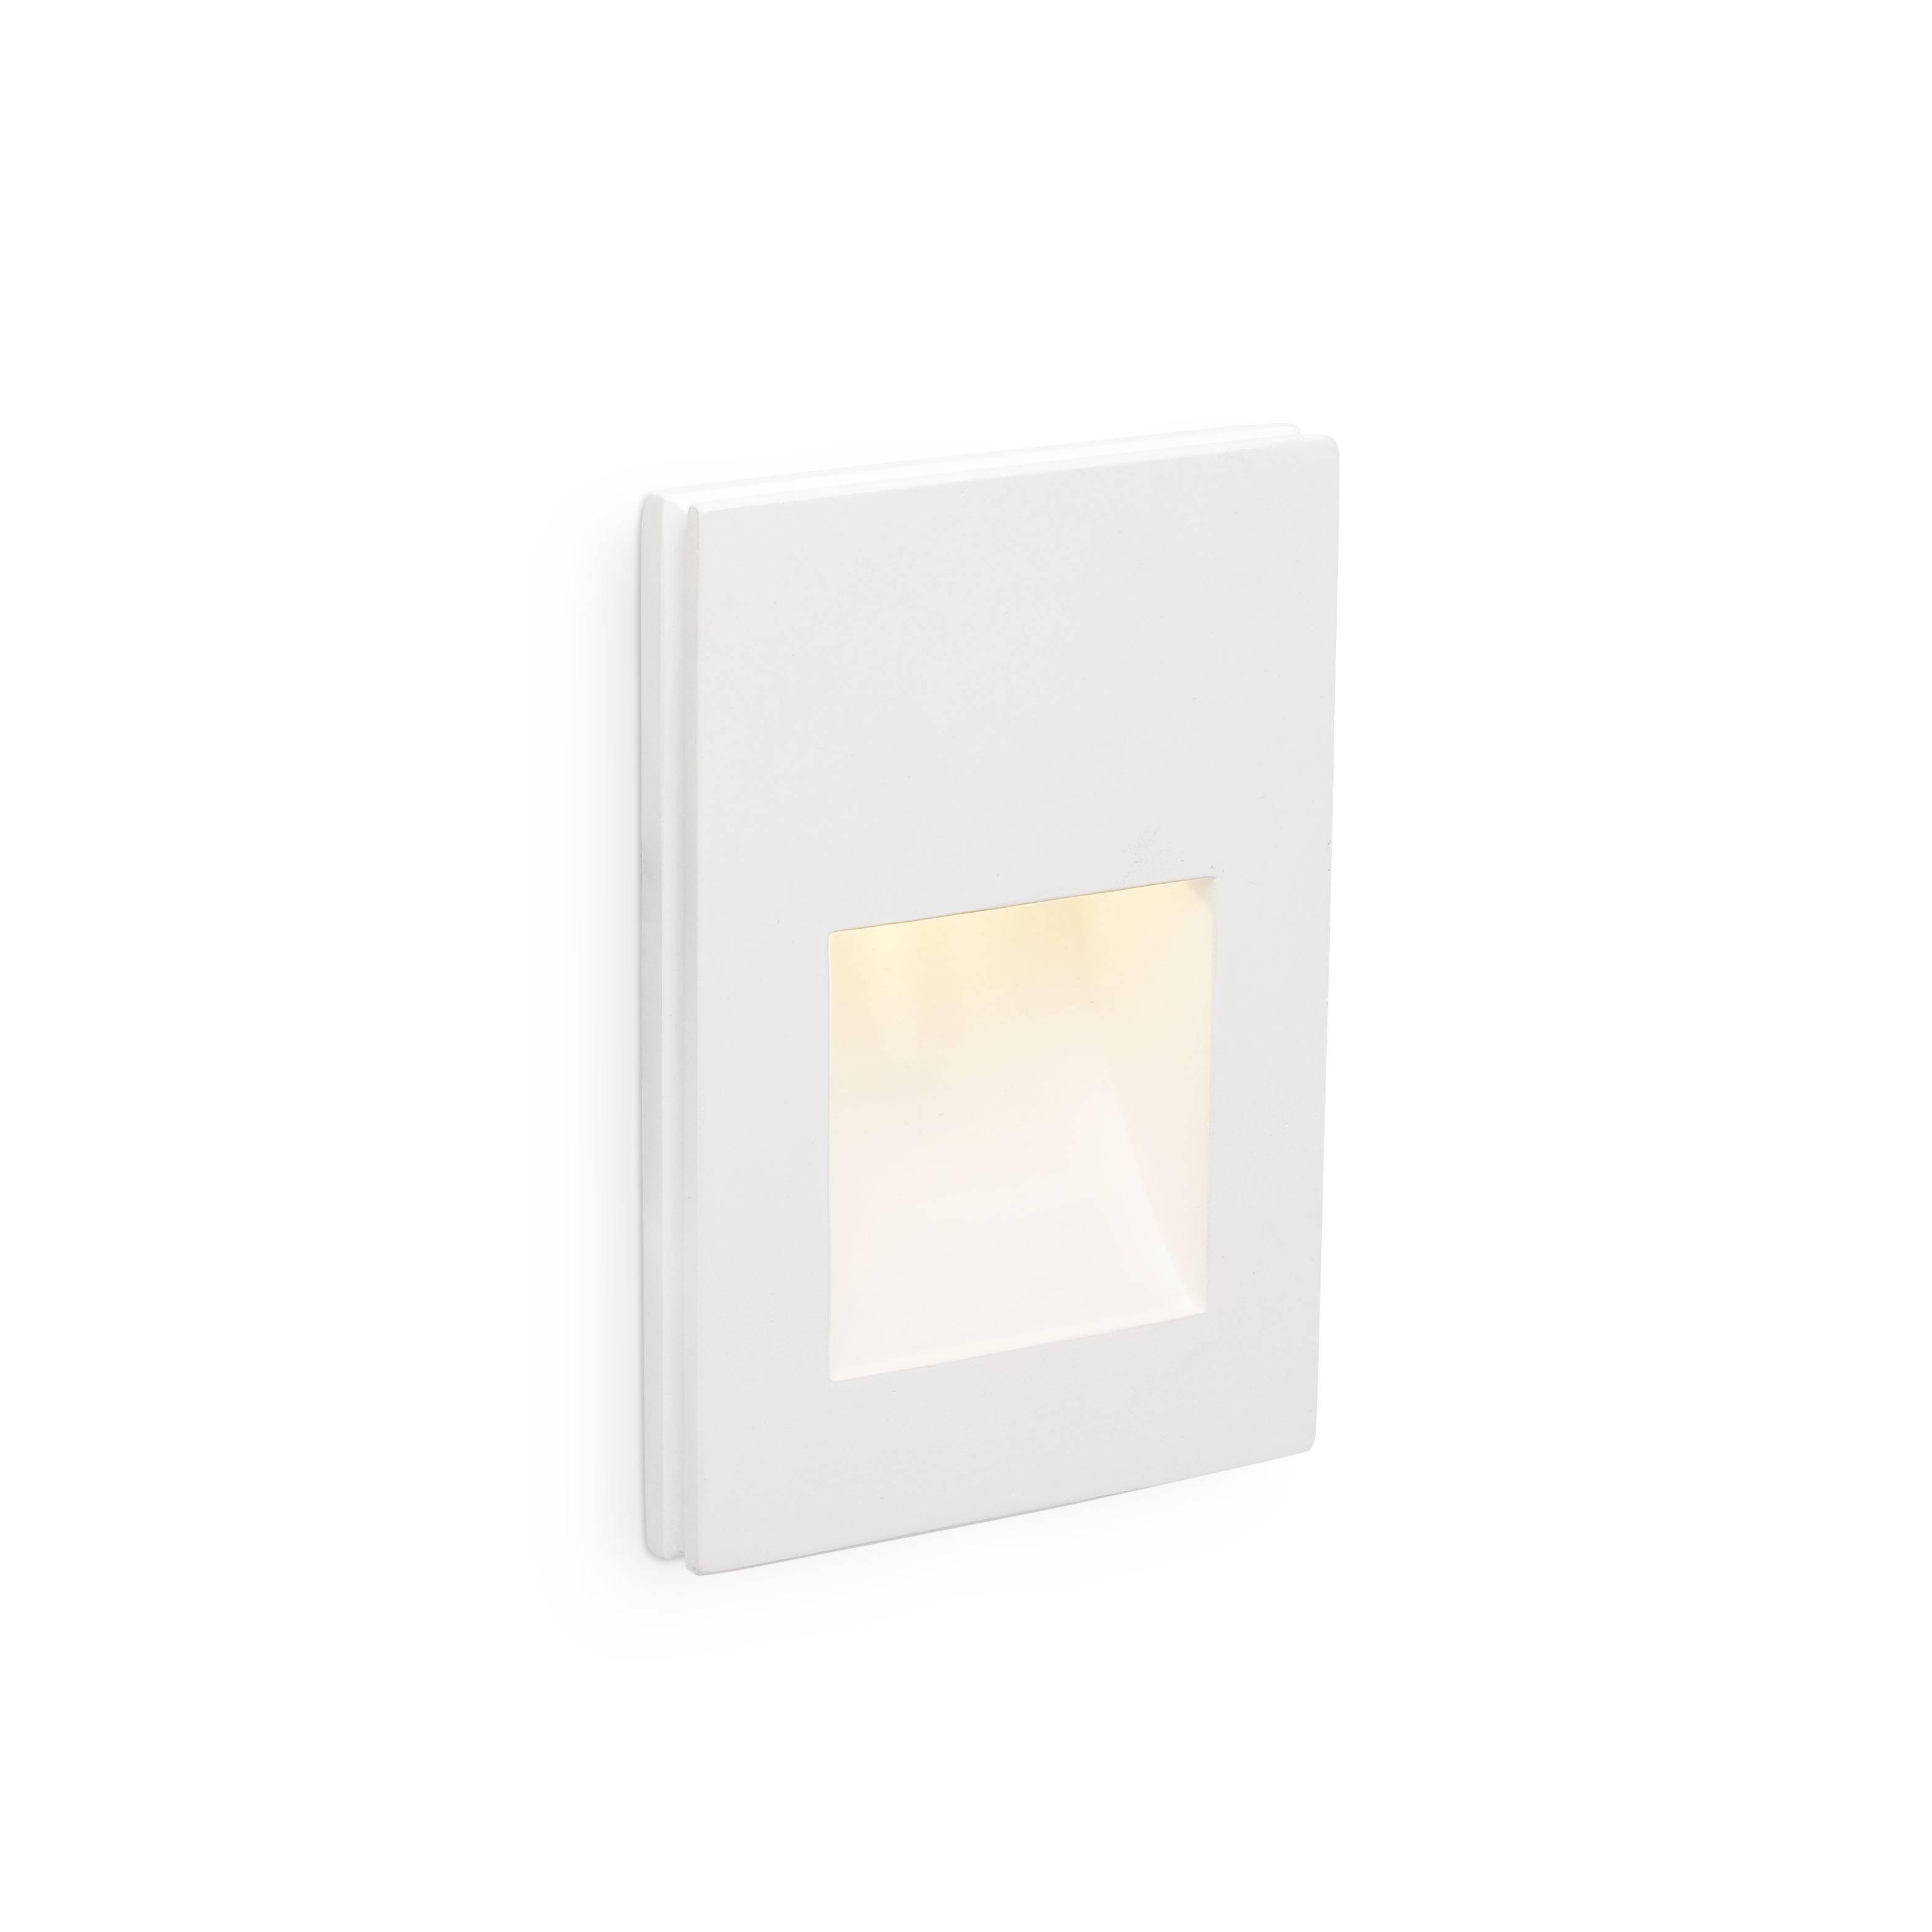 Plas LED 1 Light Indoor Recessed Wall Light White Plaster